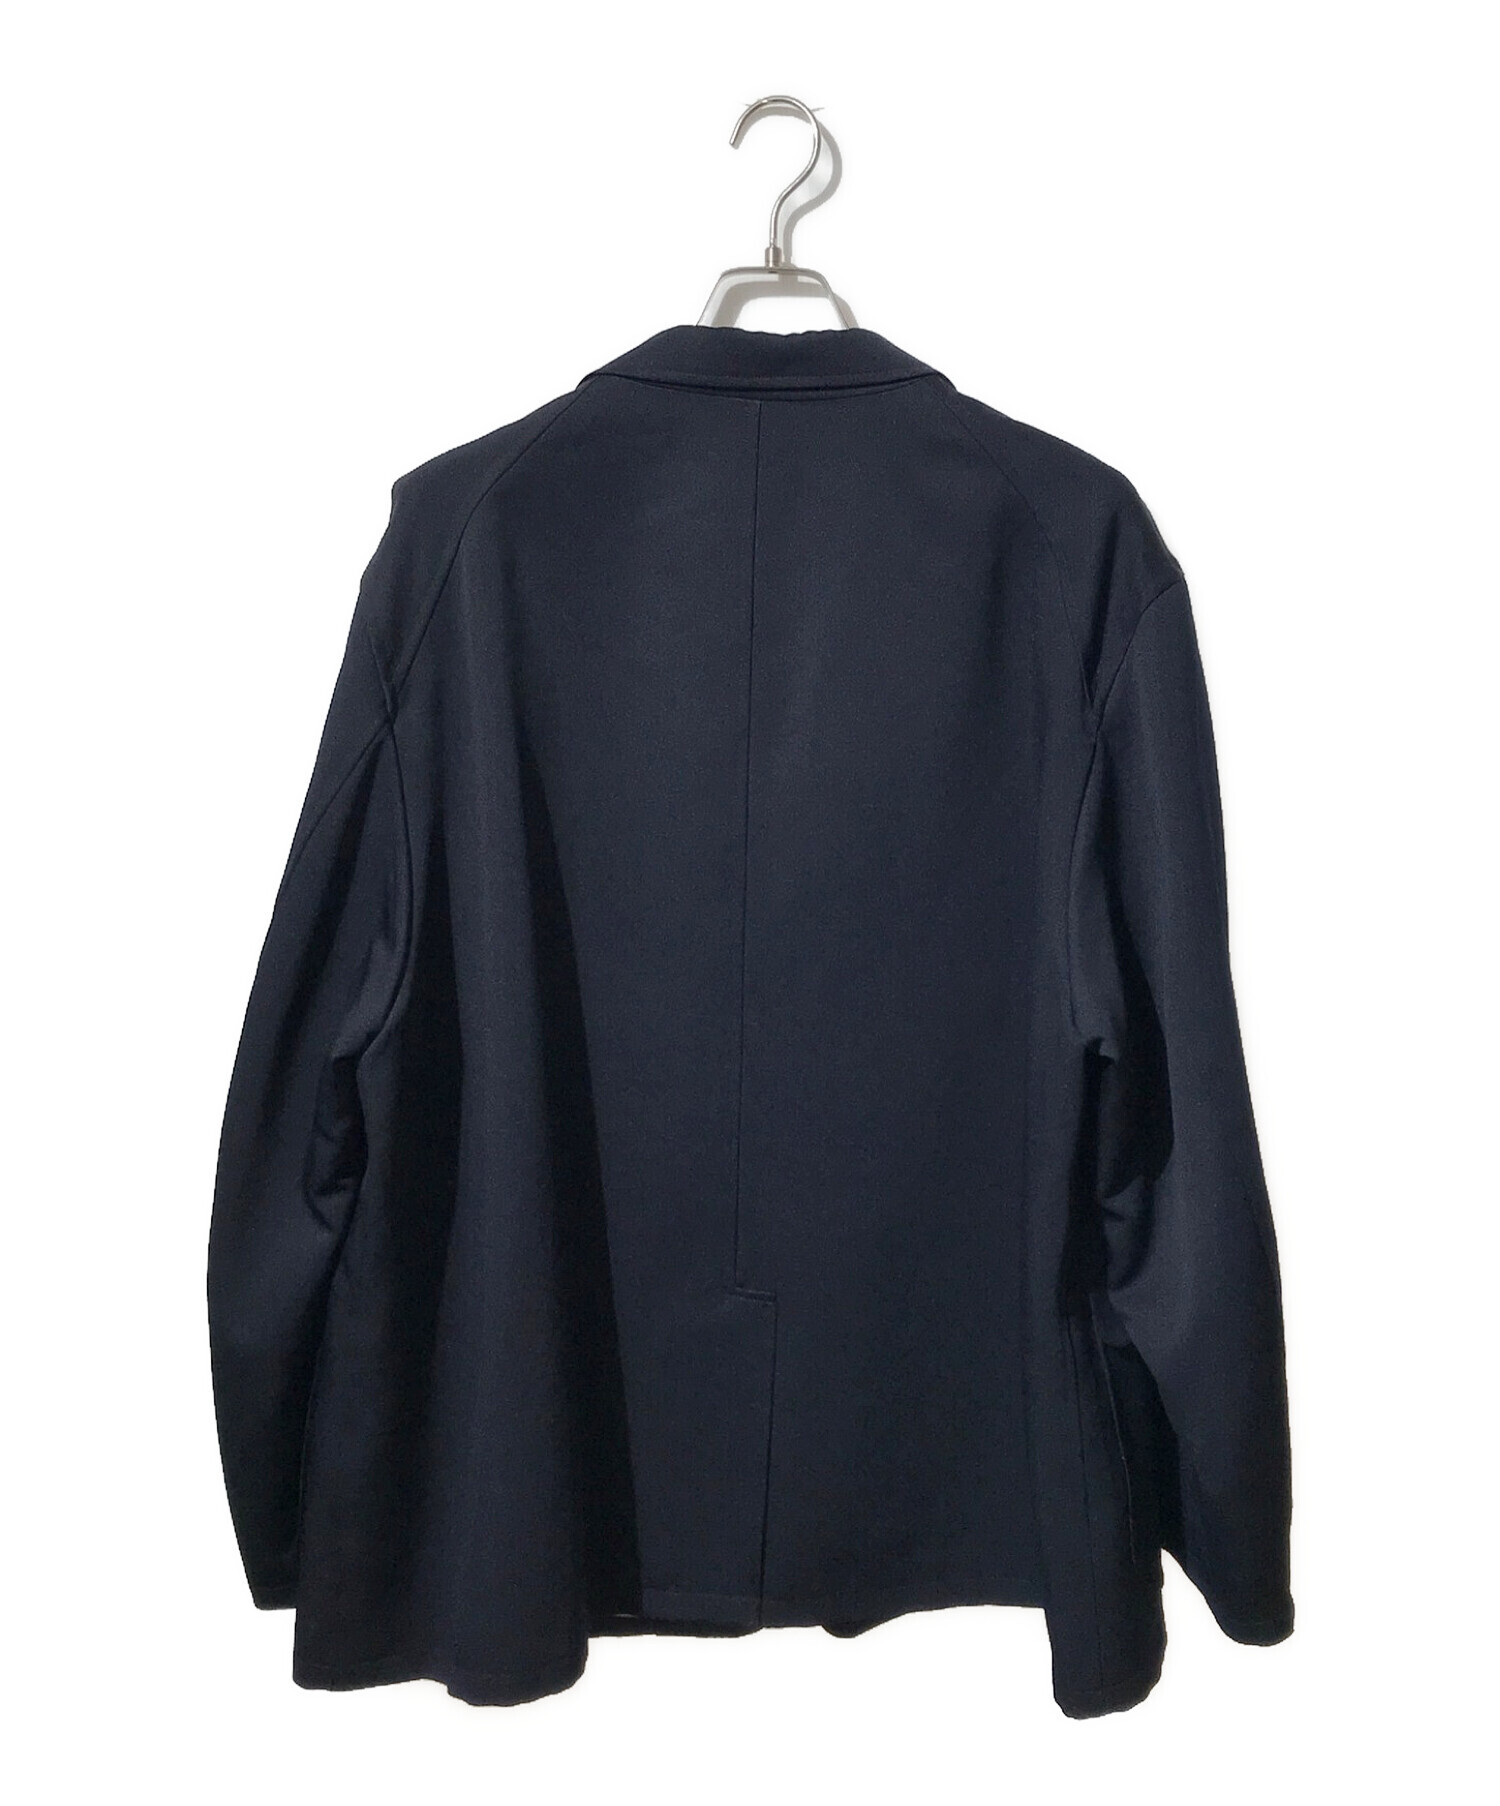 Needles (ニードルス) 別注 2button Jacket/2ボタンジャケット/紺ブレ ネイビー サイズ:XL